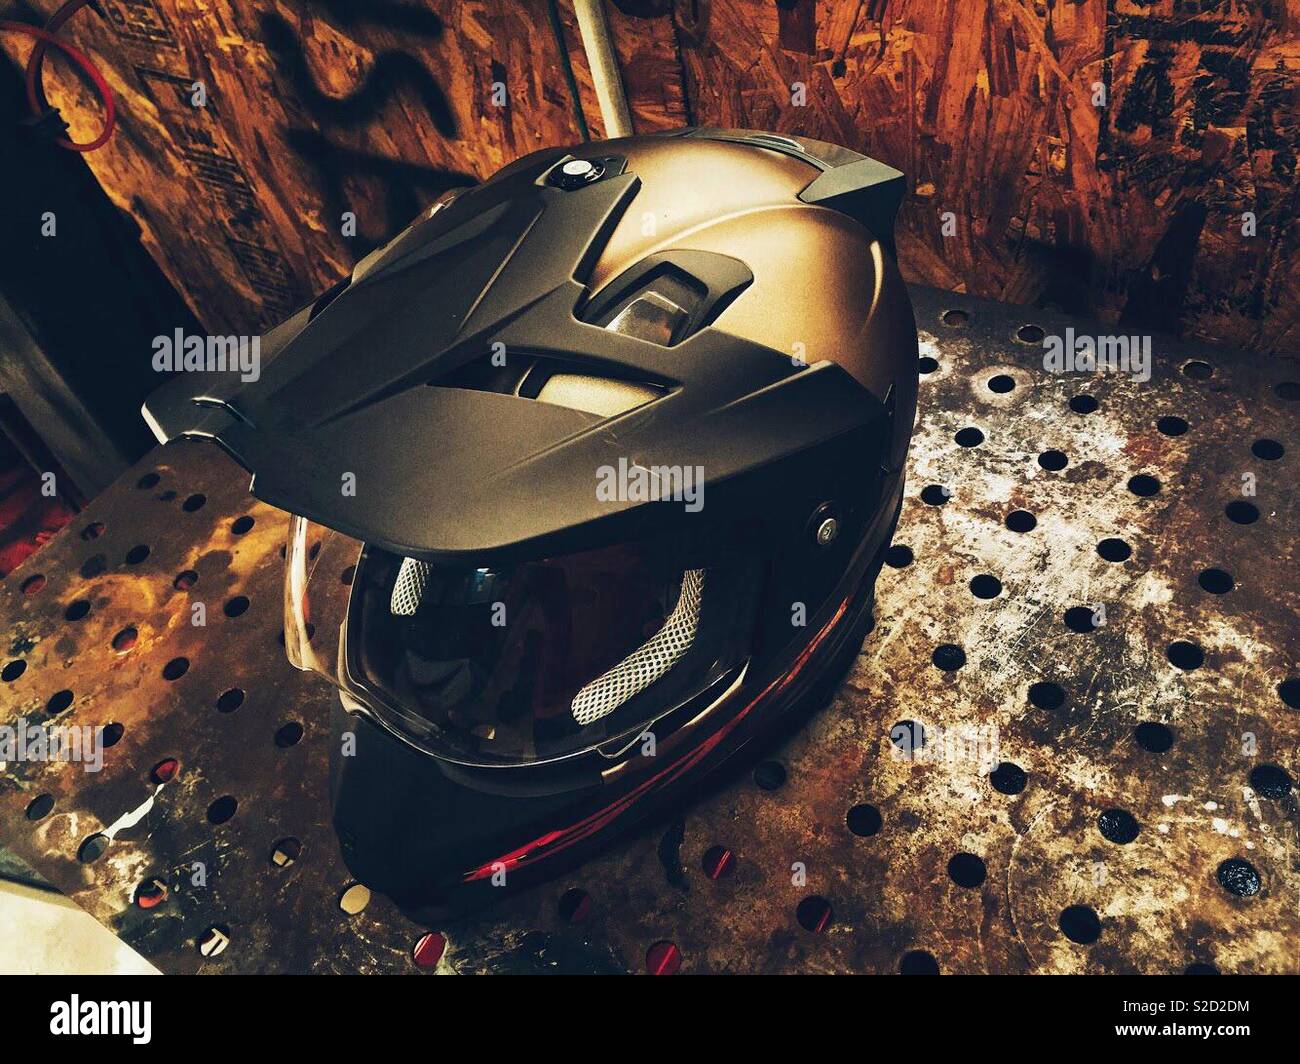 Casco de motocicleta de placa de metal duro Foto de stock